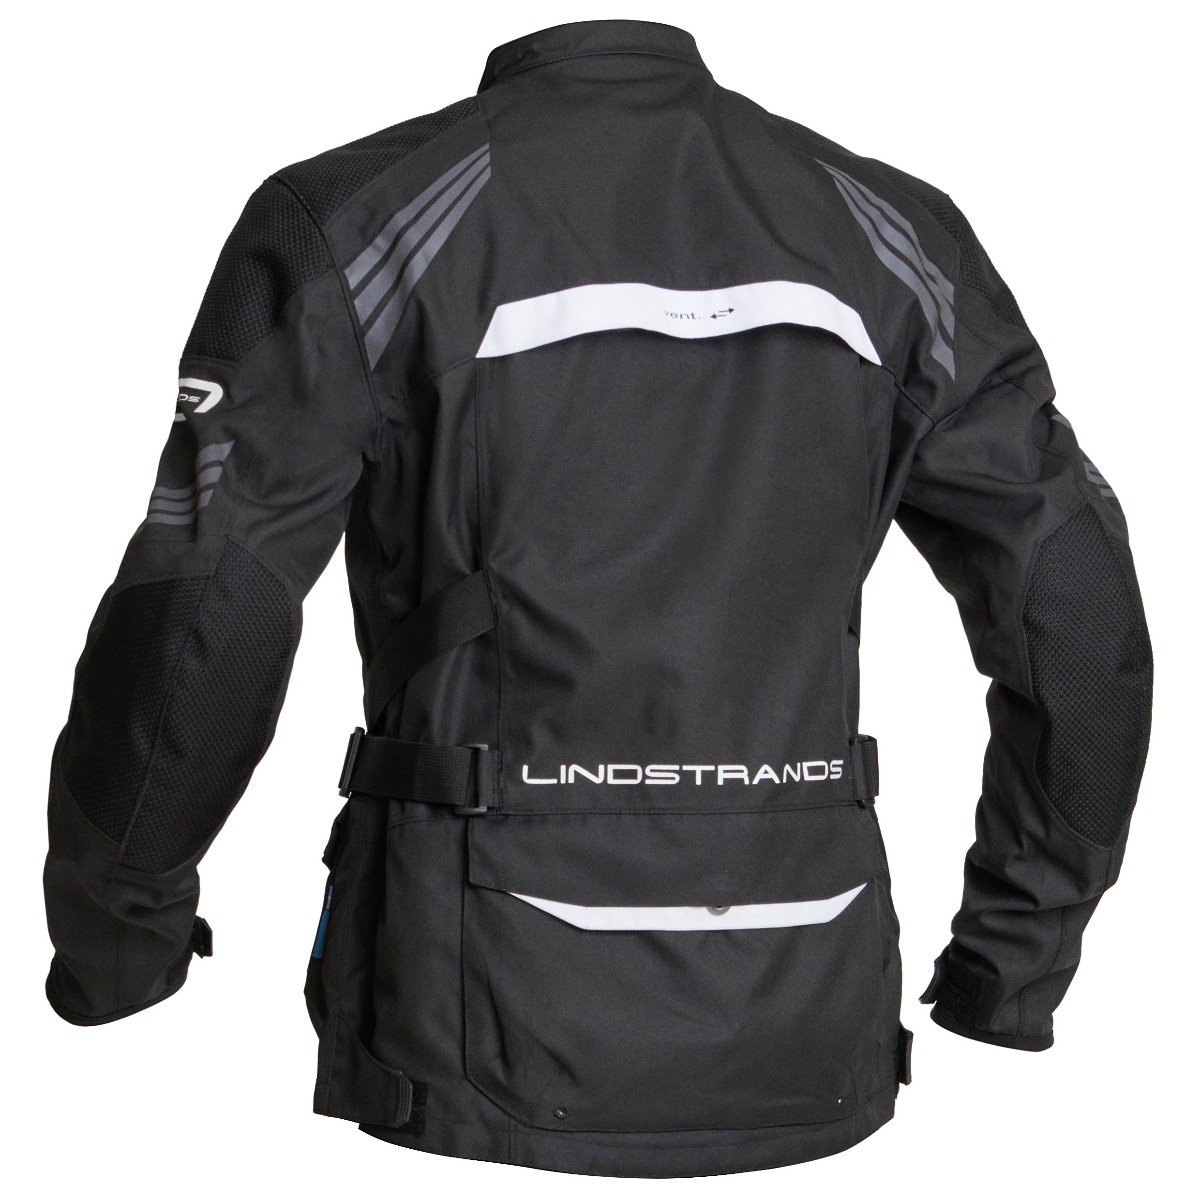 Image of Lindstrands Transtrand Jacket Black White Size 56 ID 6438235187892